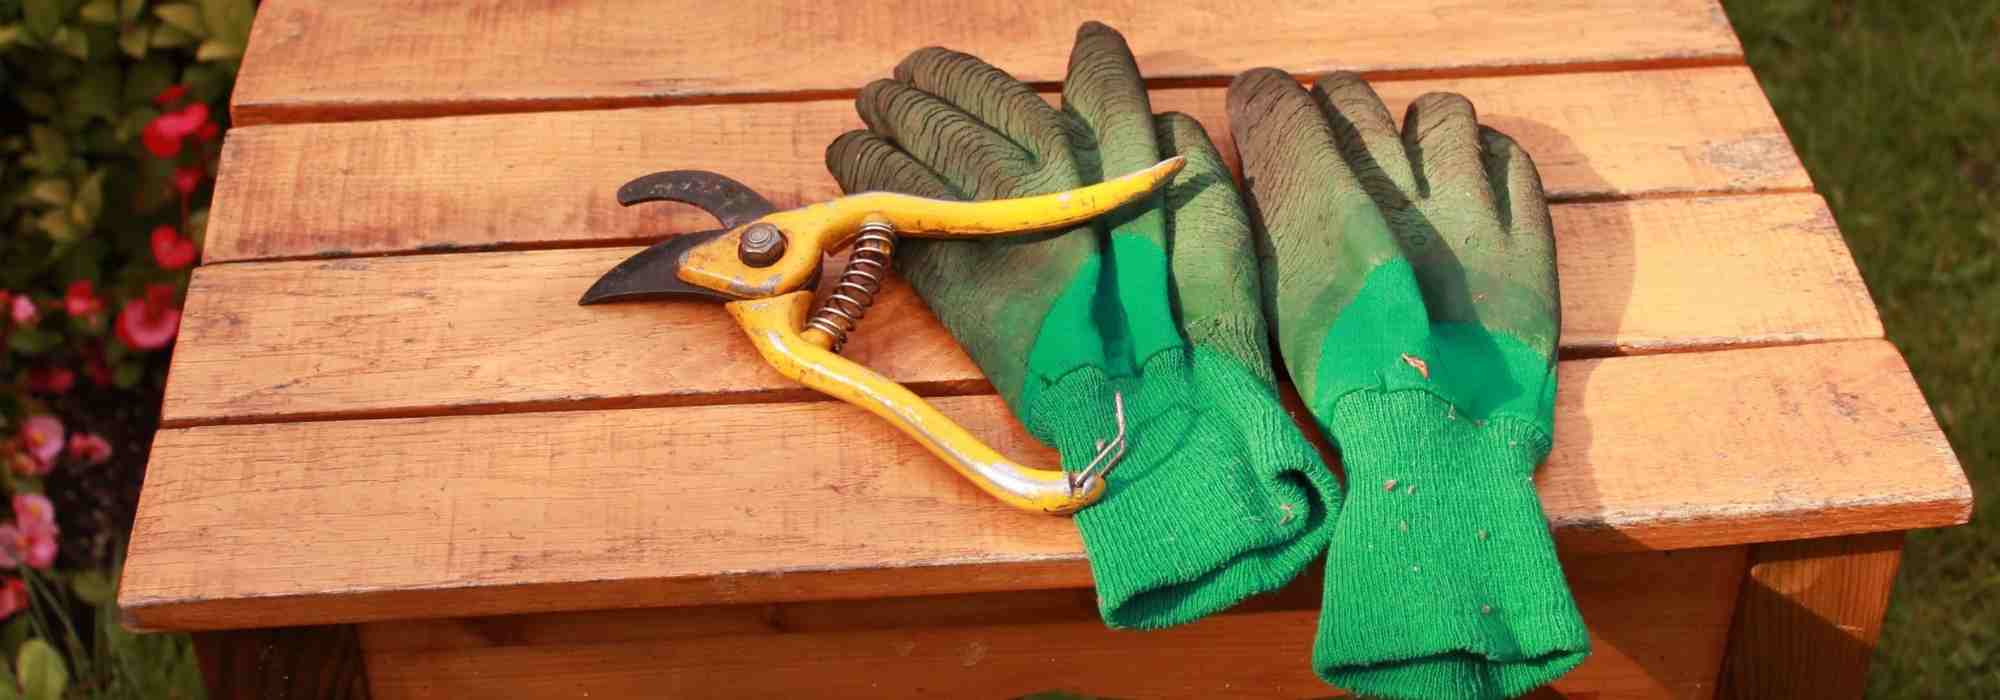 Gants de jardinage femme - S, M - Vert, noir